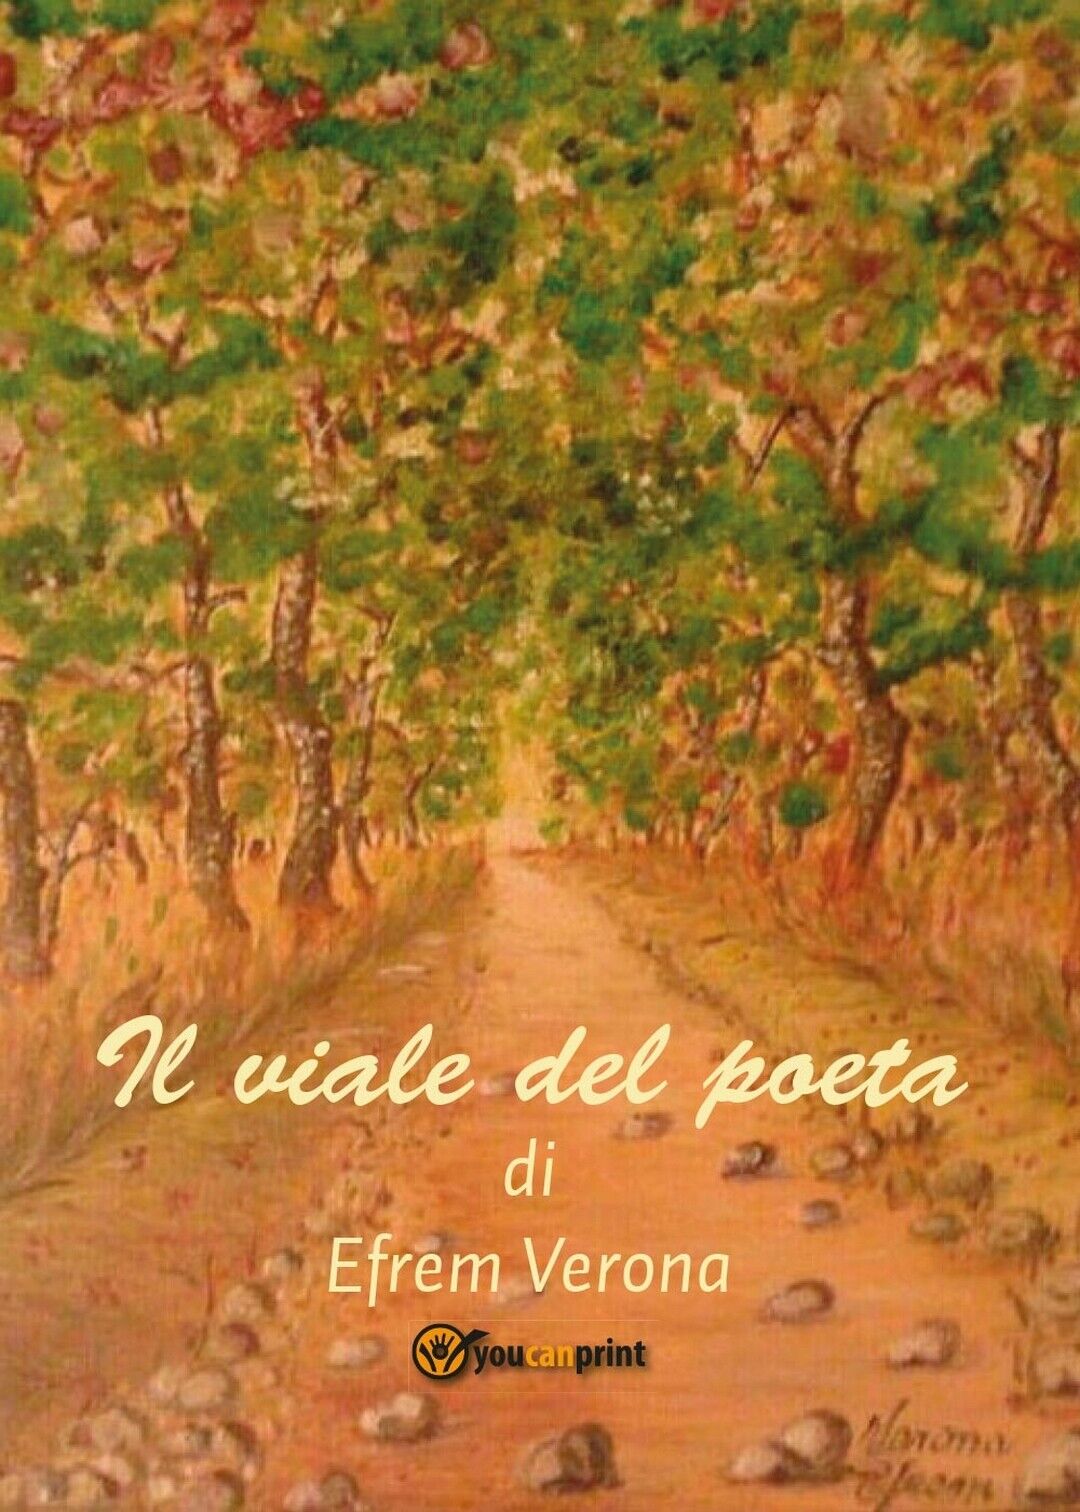 Il viale del poeta  di Efrem Verona,  2016,  Youcanprint